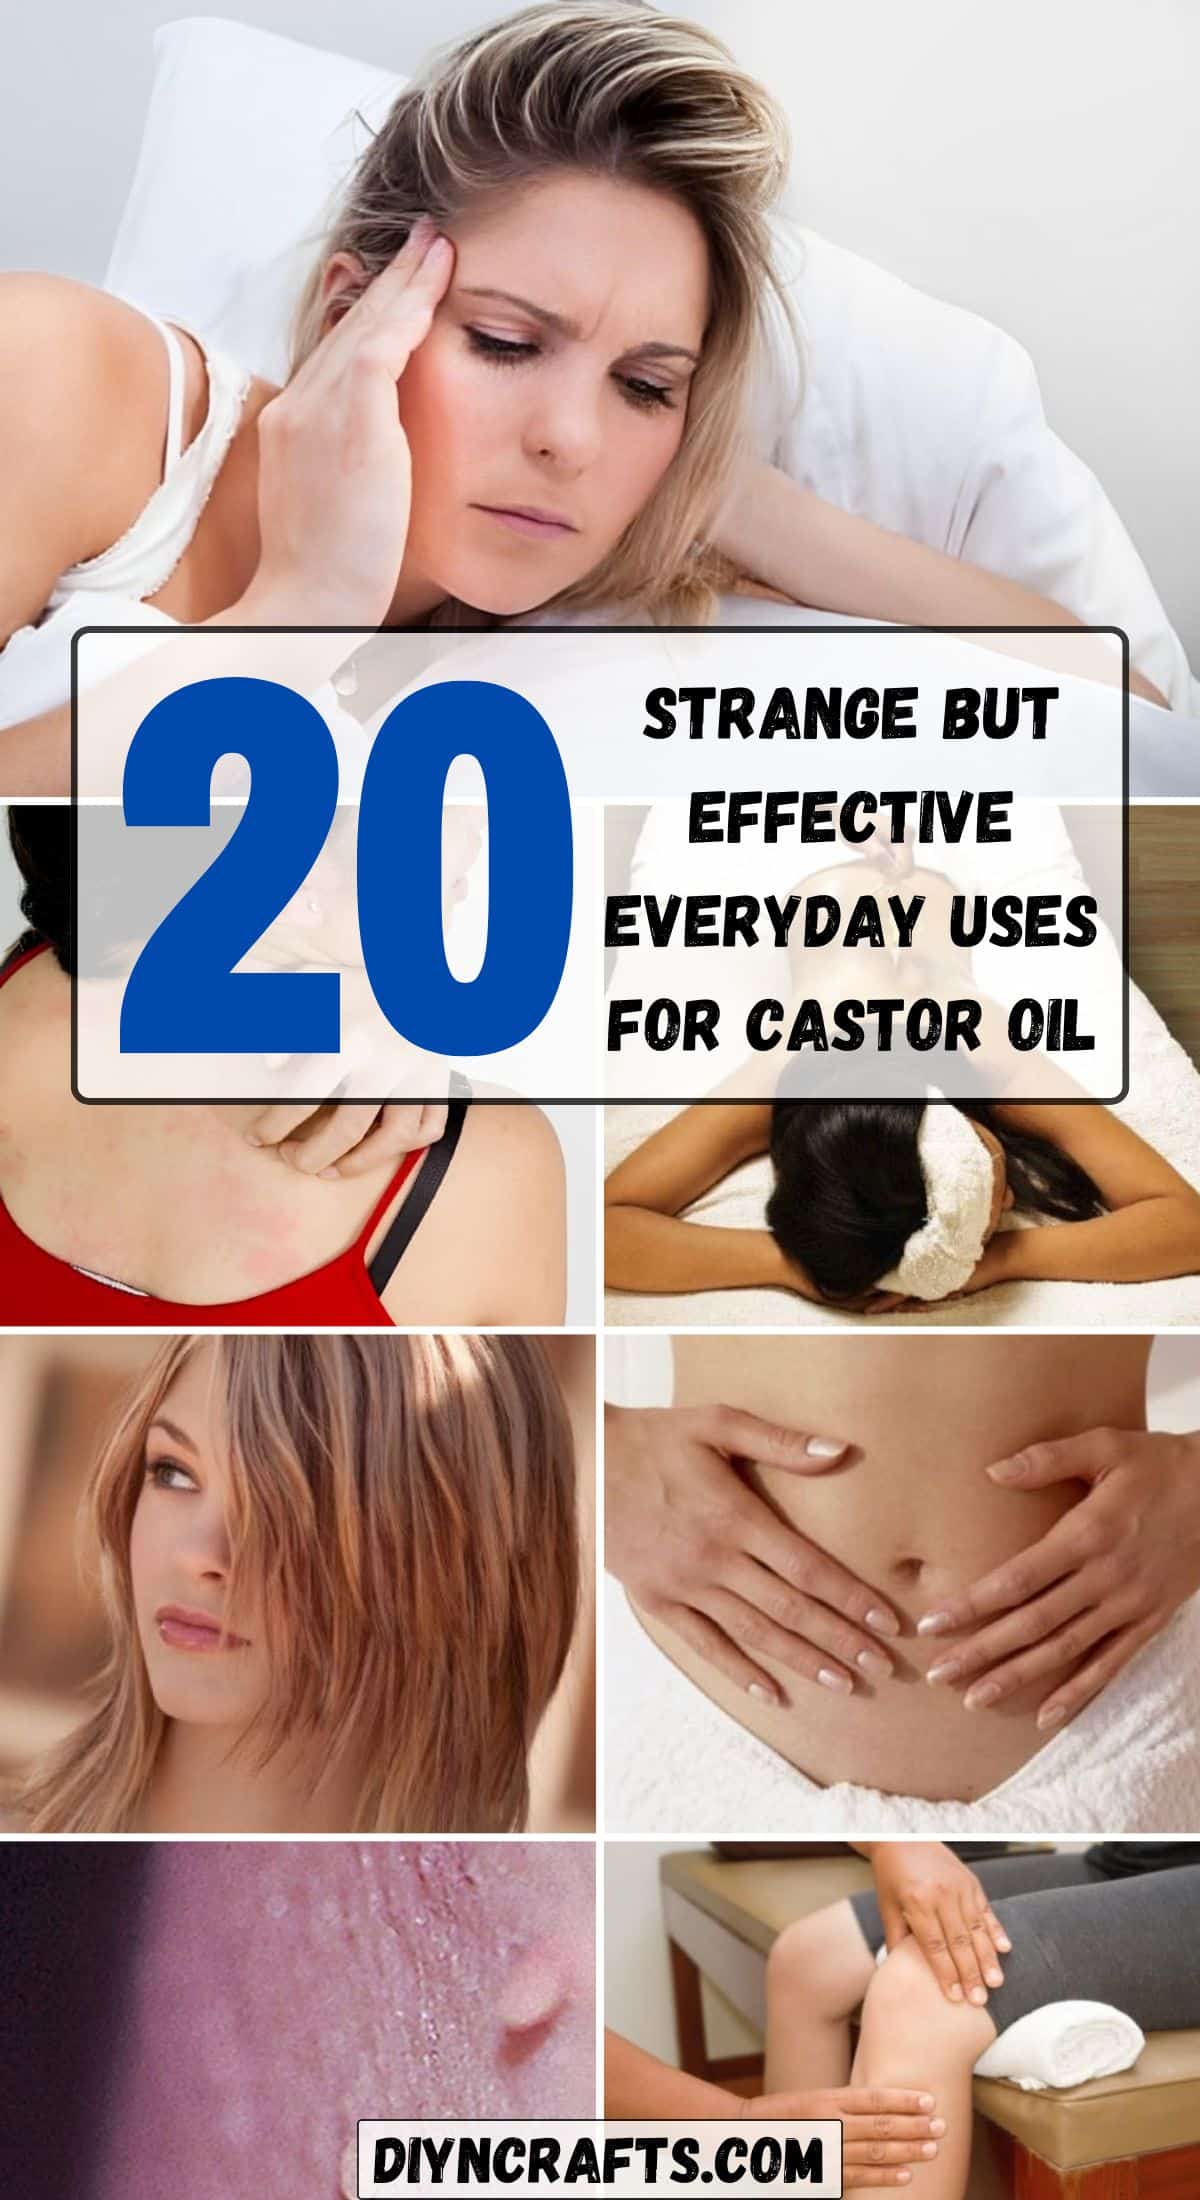 20 Strange but Effective Everyday Uses for Castor Oil collage.